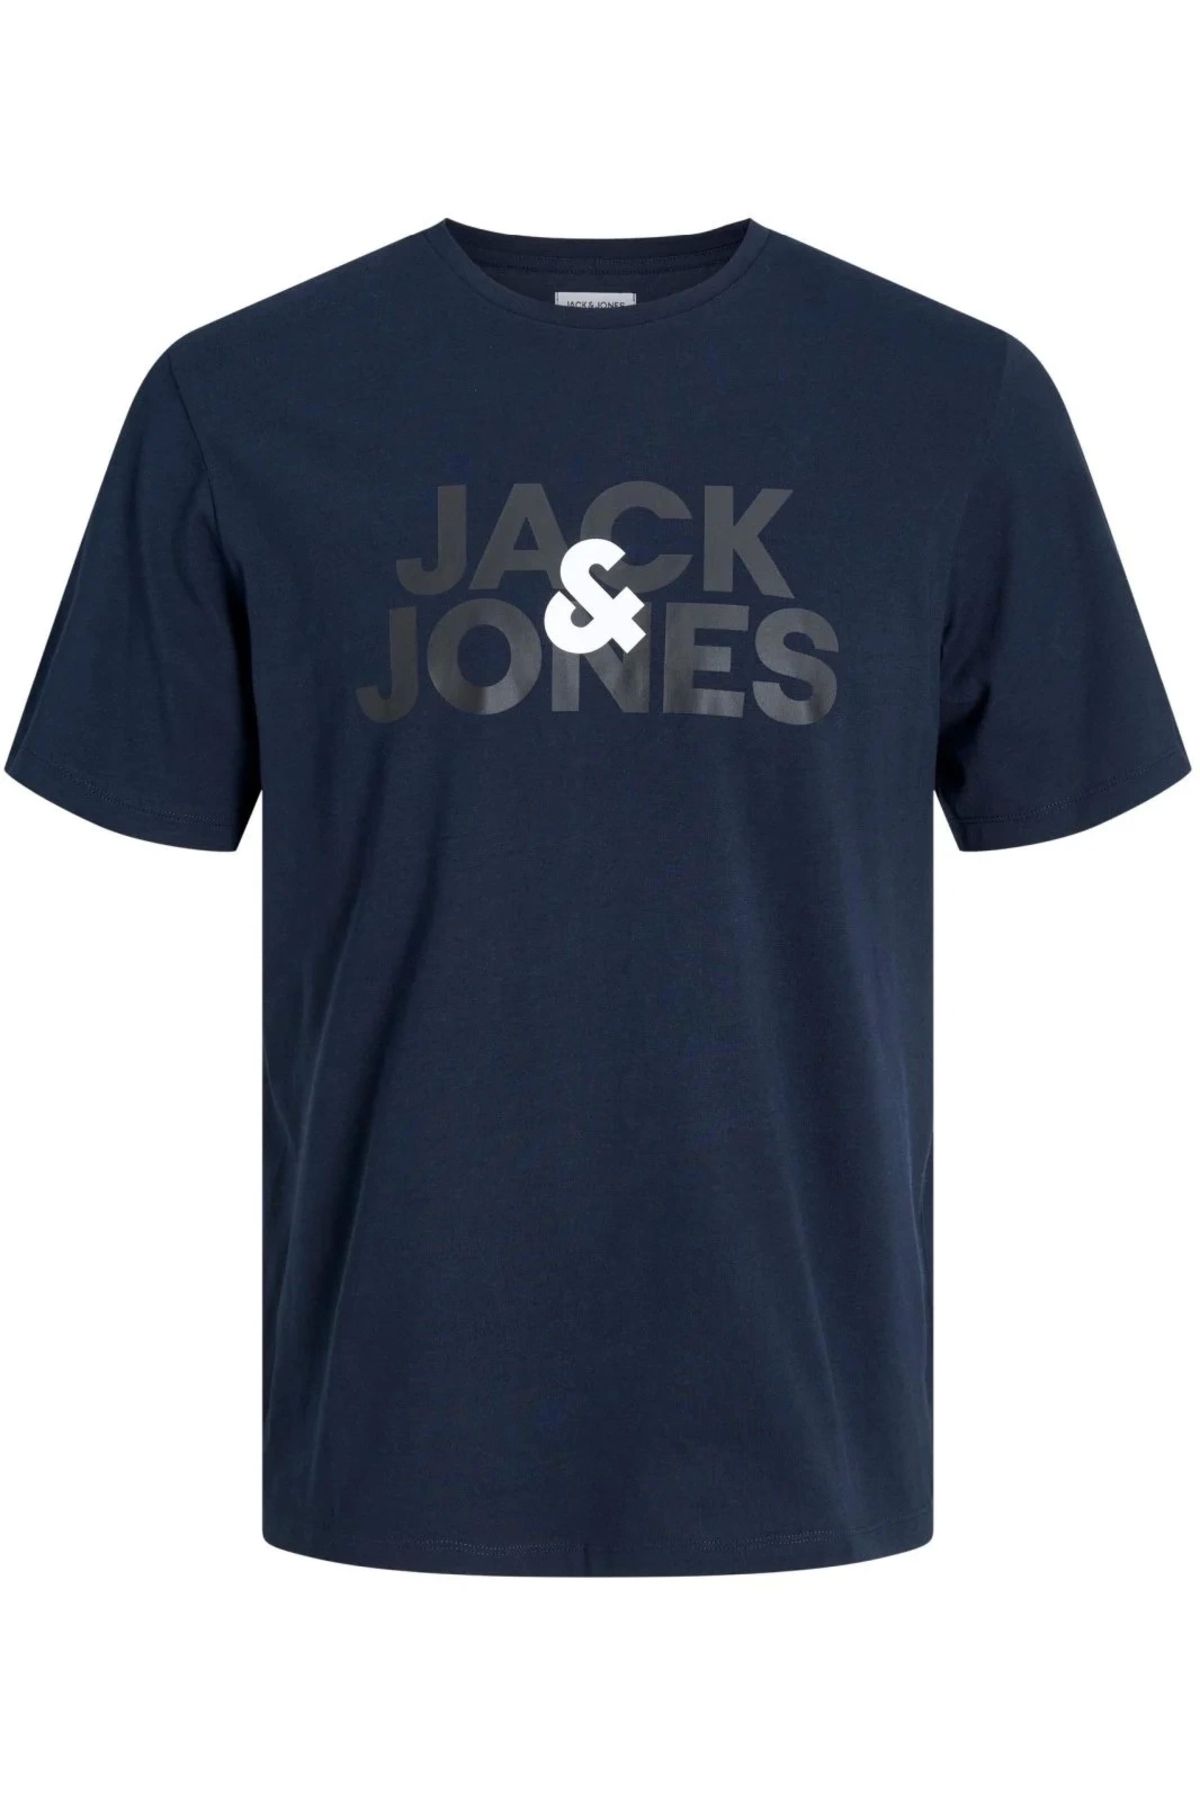 Jack & Jones Jack&jones 12250263 0 Yaka Erkek Tshirt - Lacivert